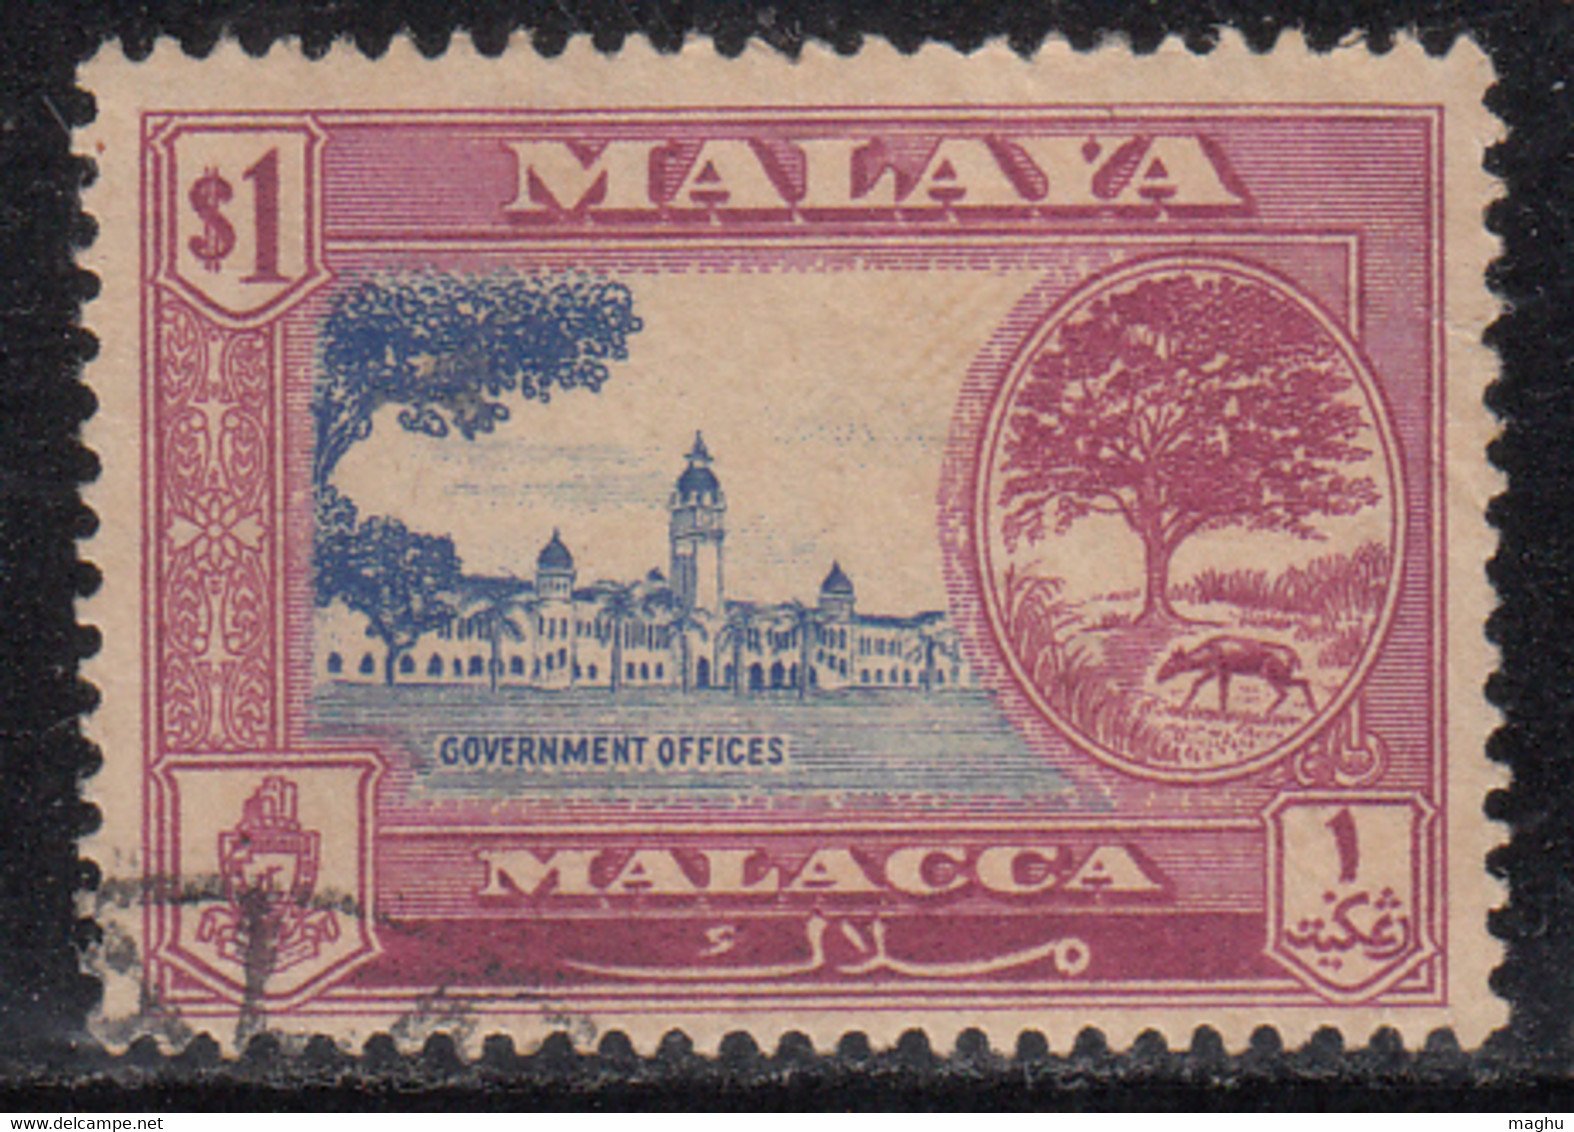 Malacca $1.00 Used 1960, Tree, Animal, Malaya / Malaysia, Mouse Deer, - Malacca